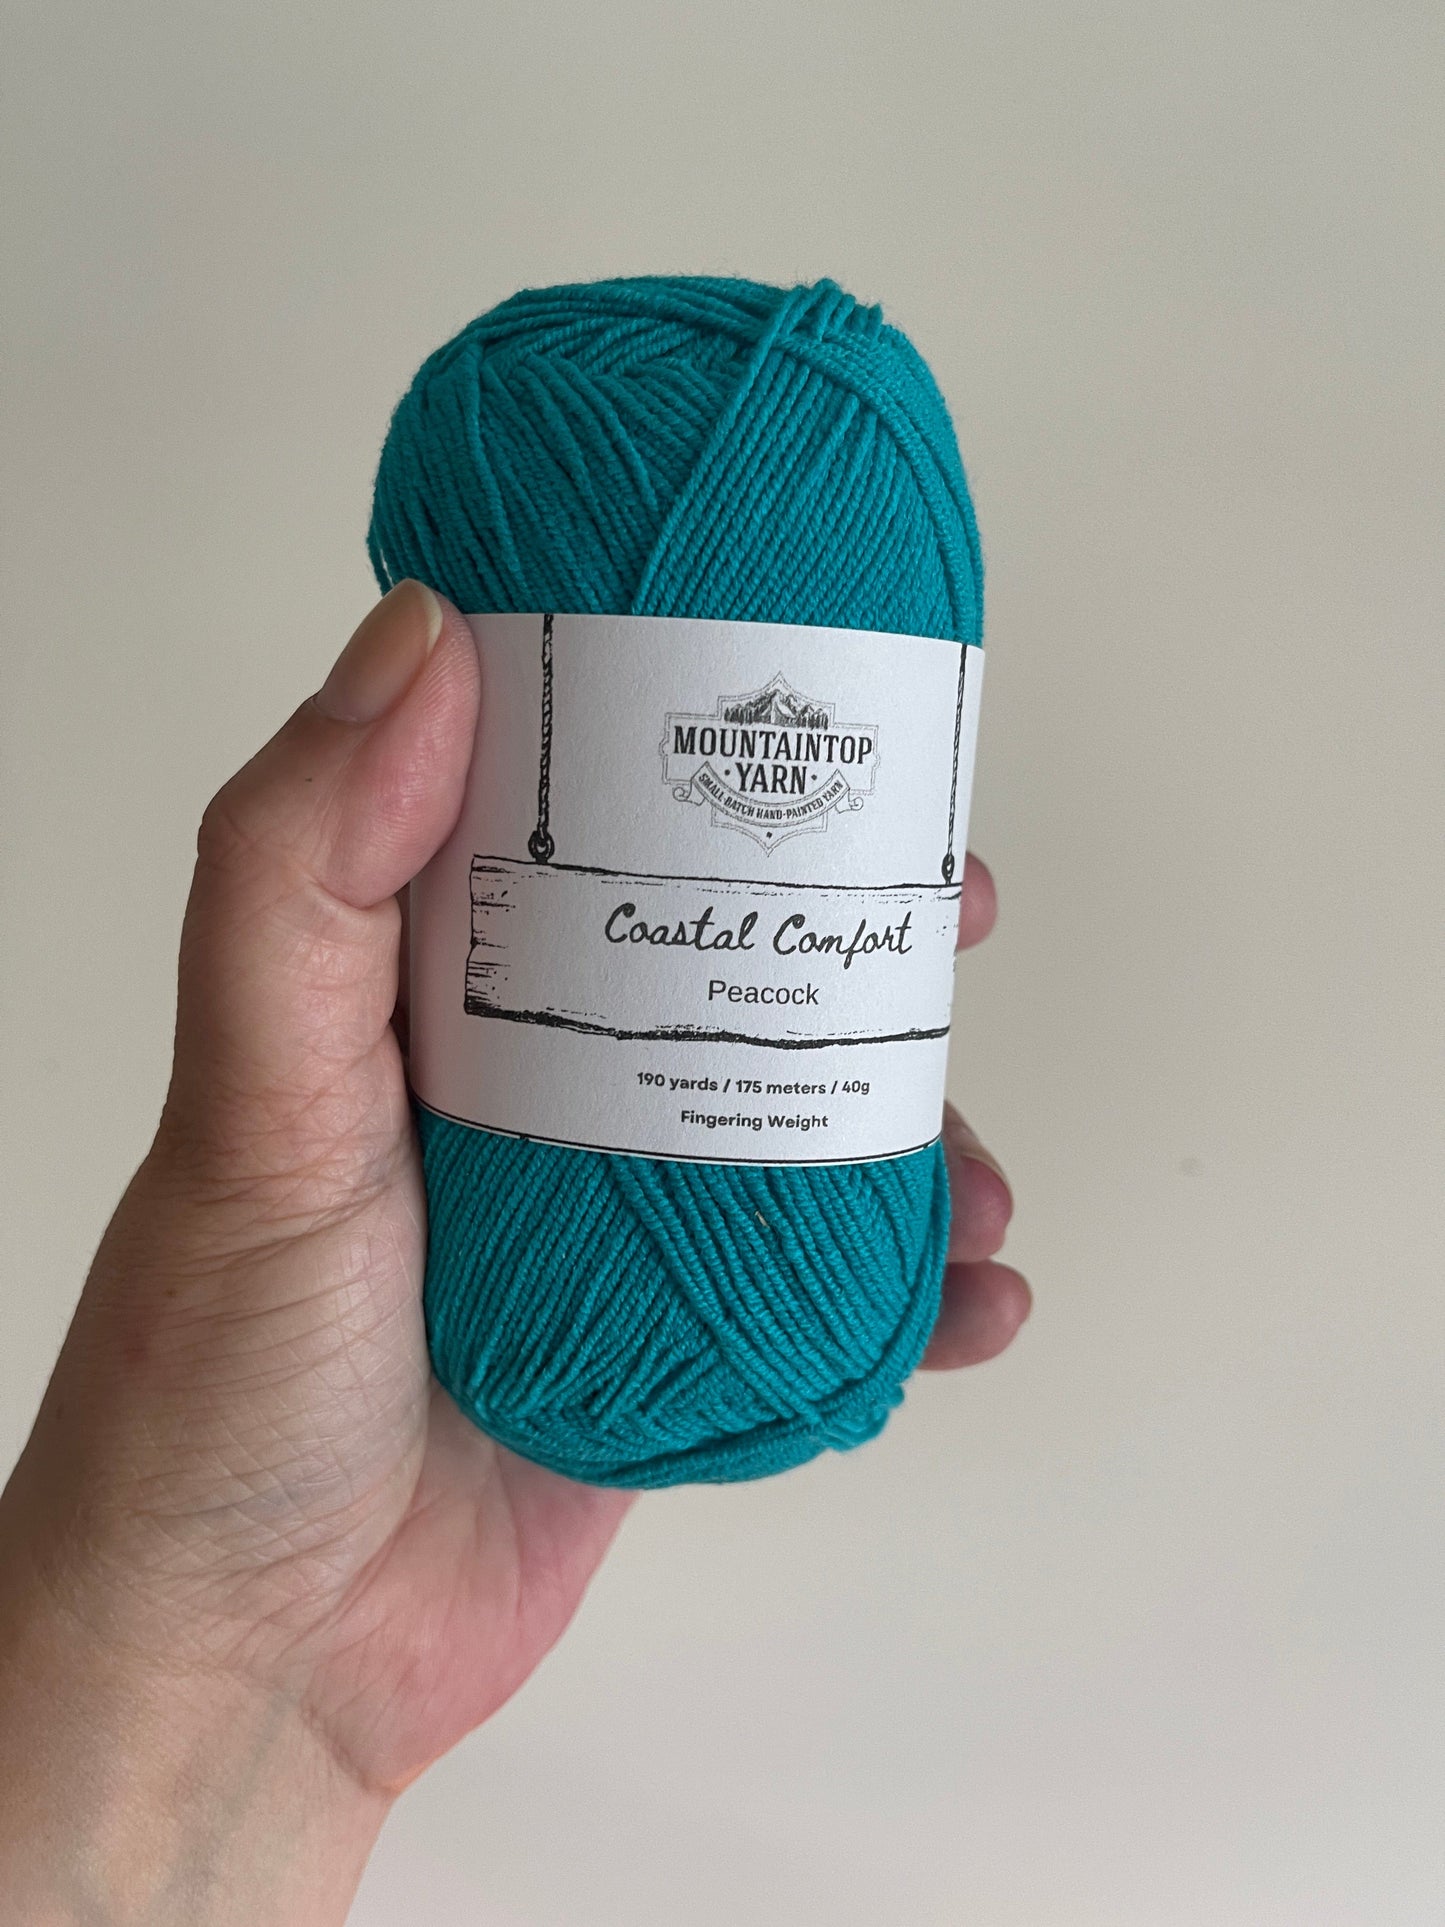 Mountaintop Yarn Peacock Coastal Comfort - Cotton and Acrylic Blend Yarn Yarn